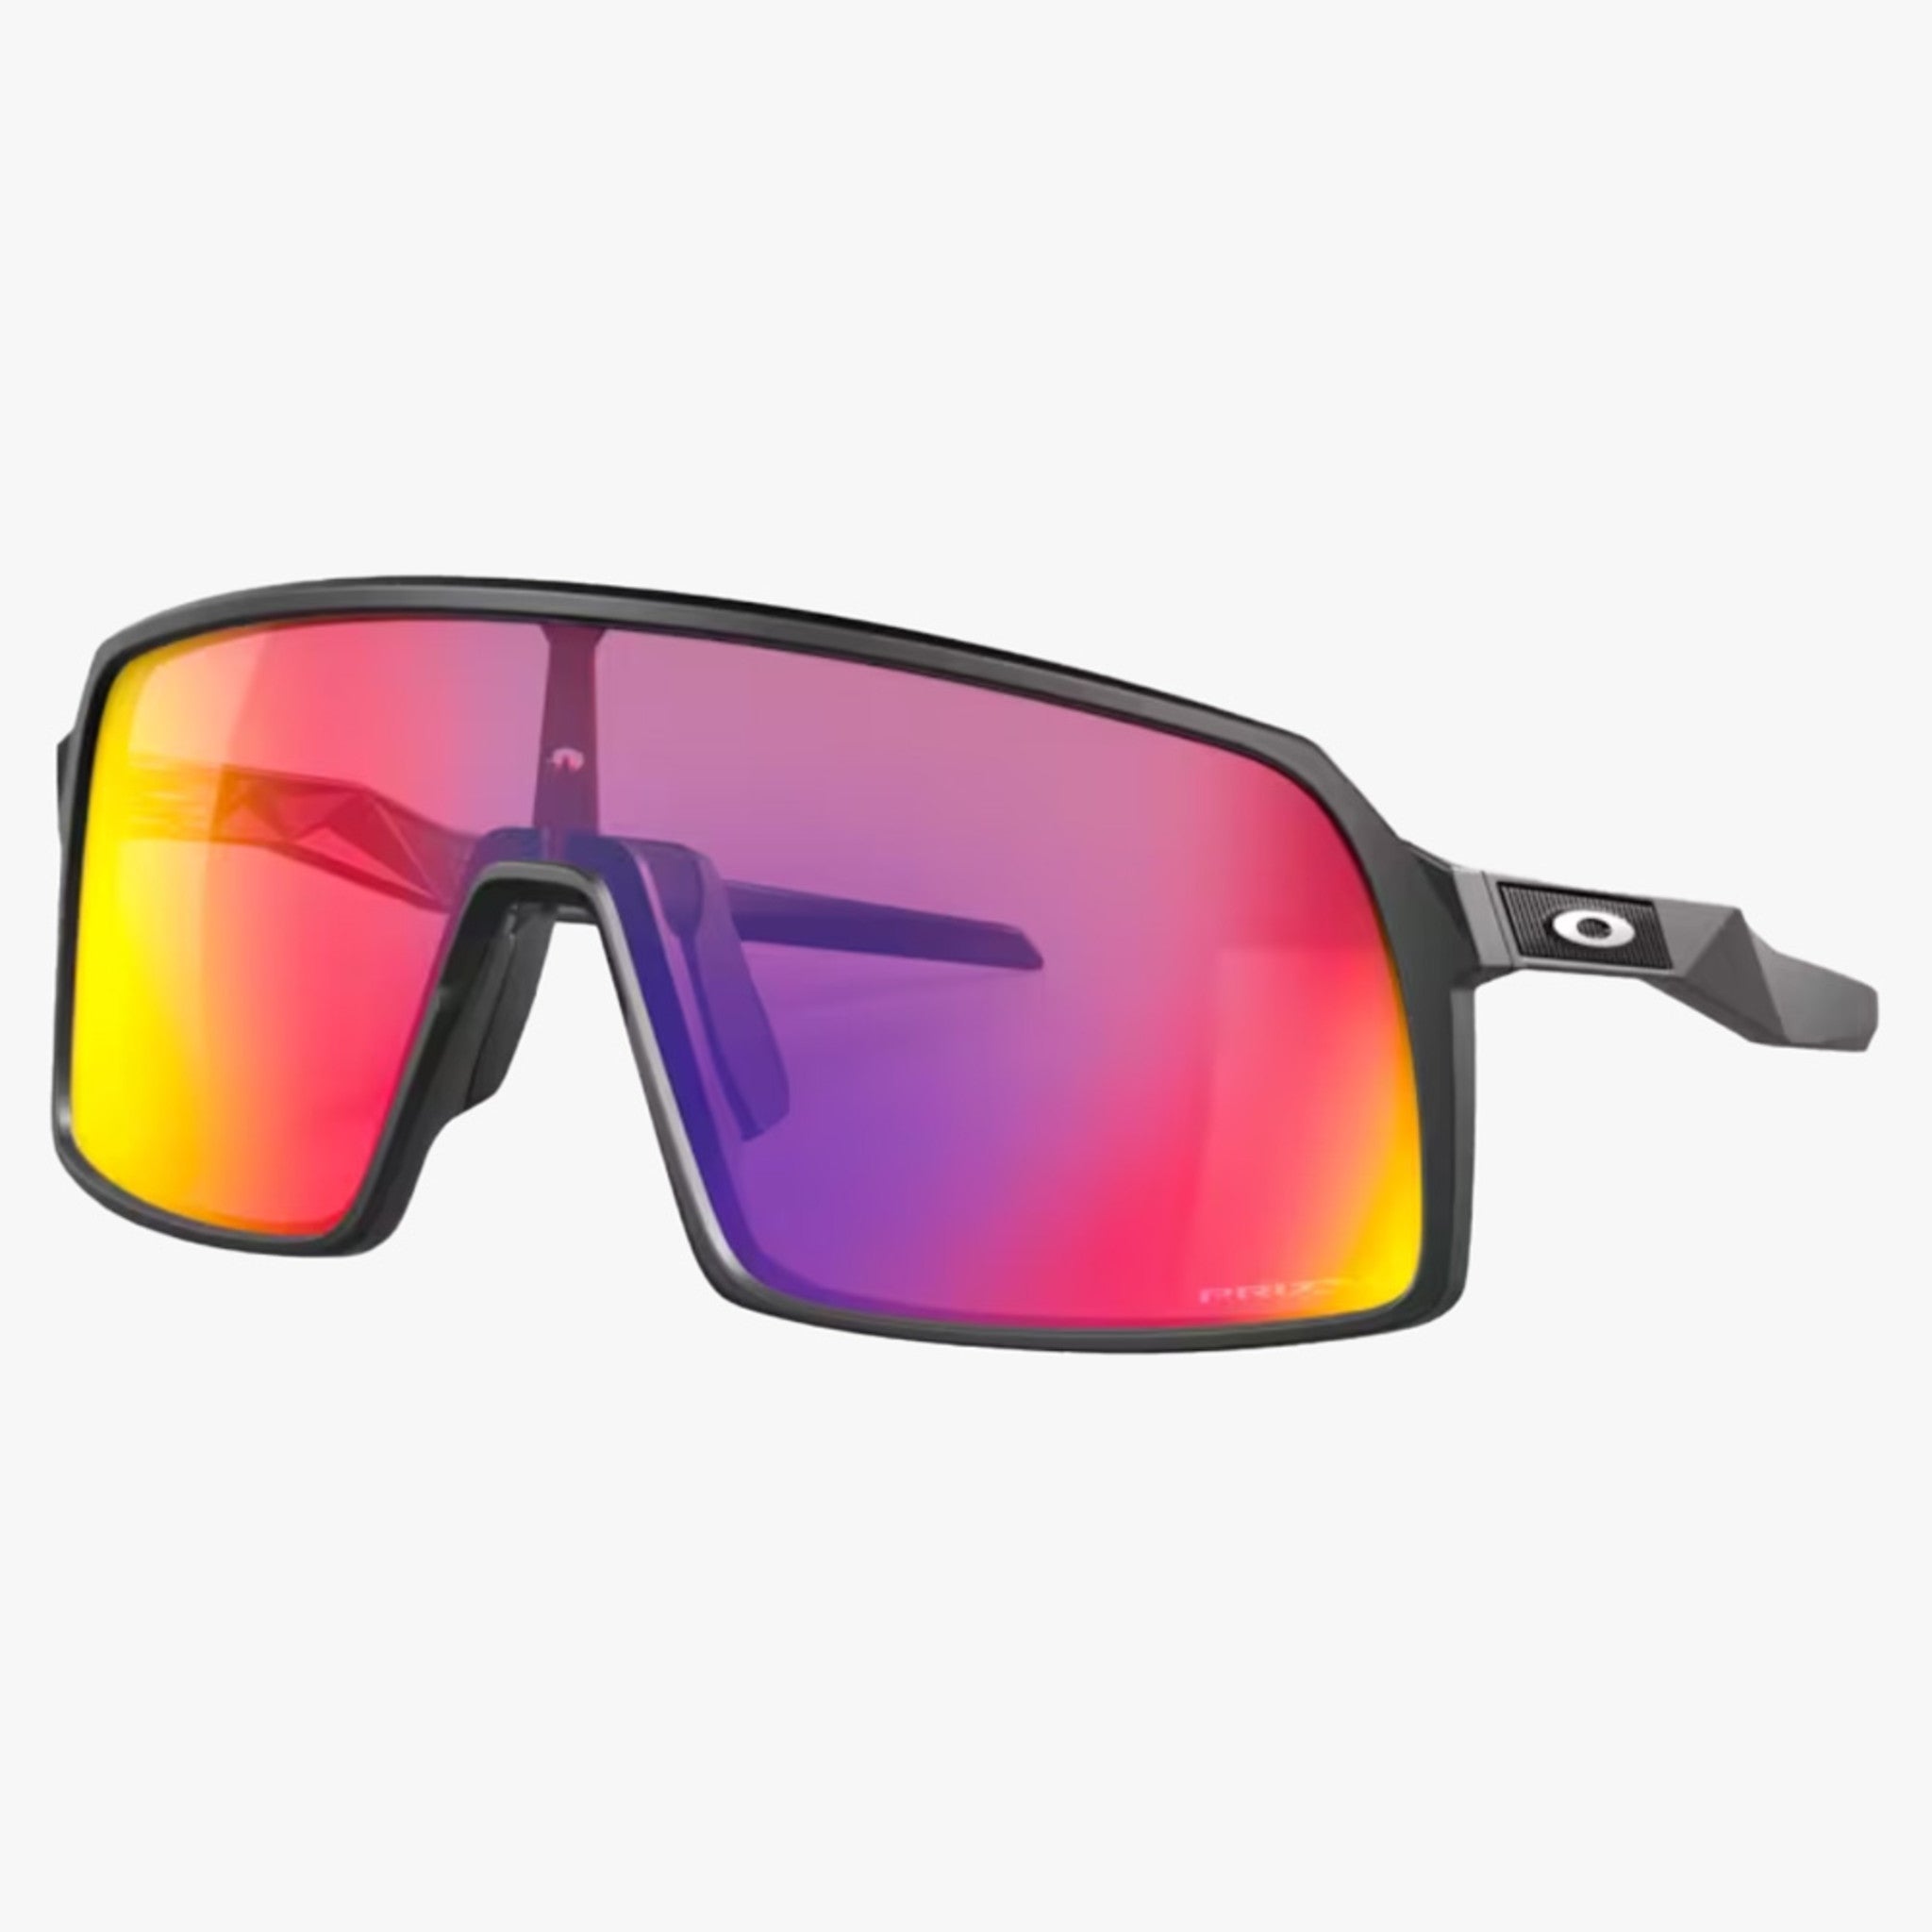 Buy Oakley Men's Gascan Rectangular Sunglasses, Matte Black/Black Iridium  Polarized, 60 mm - Pack of 2 at Amazon.in